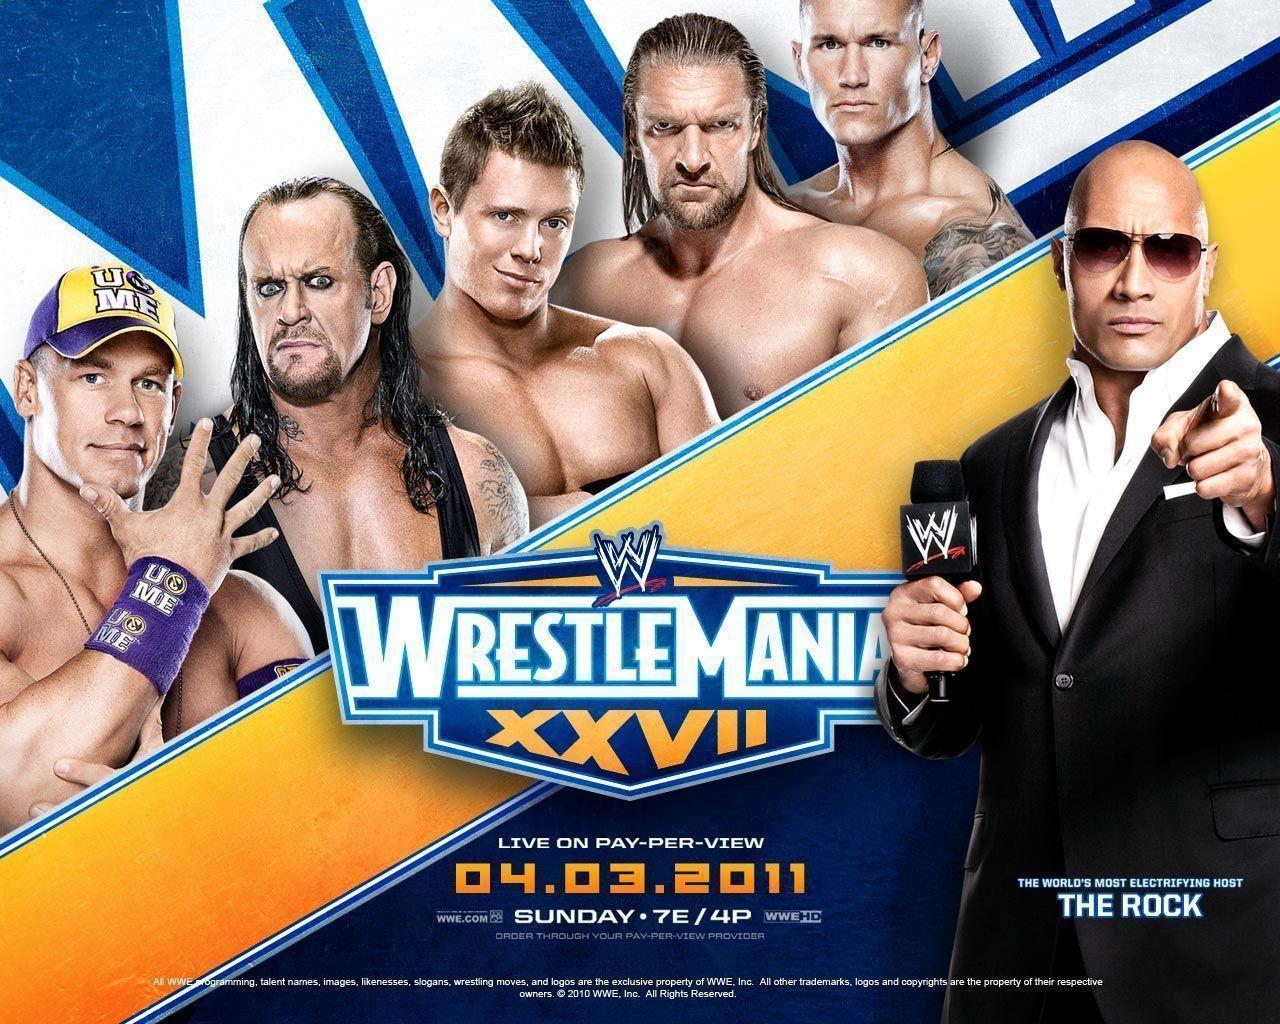 Download WrestleMania 27 Official Wallpaper! WWE ROCKER